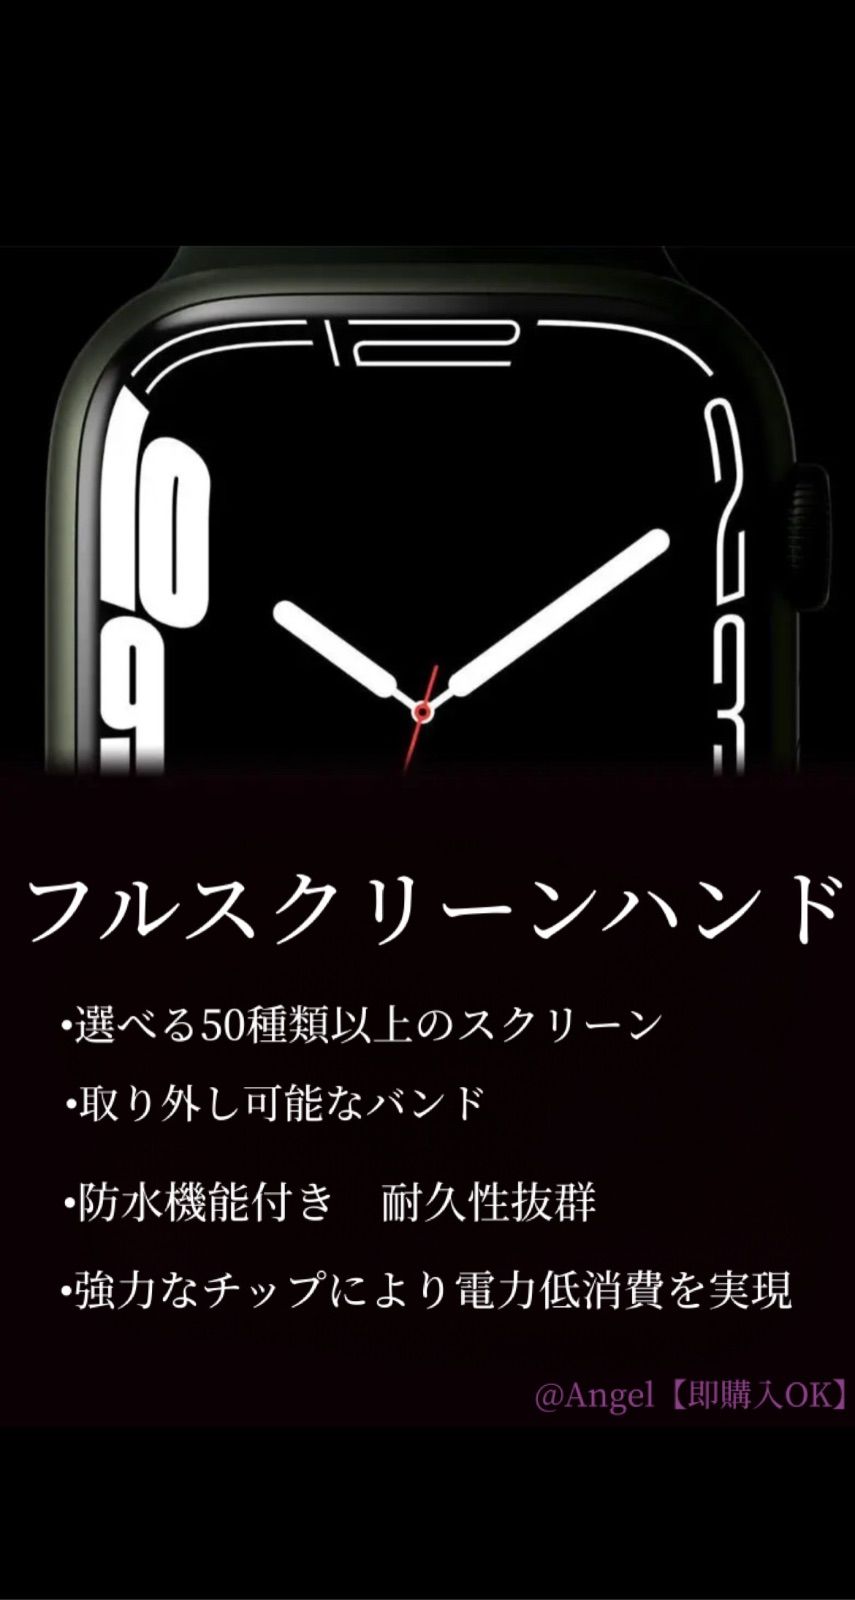 Watch 7 スマートウォッチ　時計　Apple Watch 類似品-8